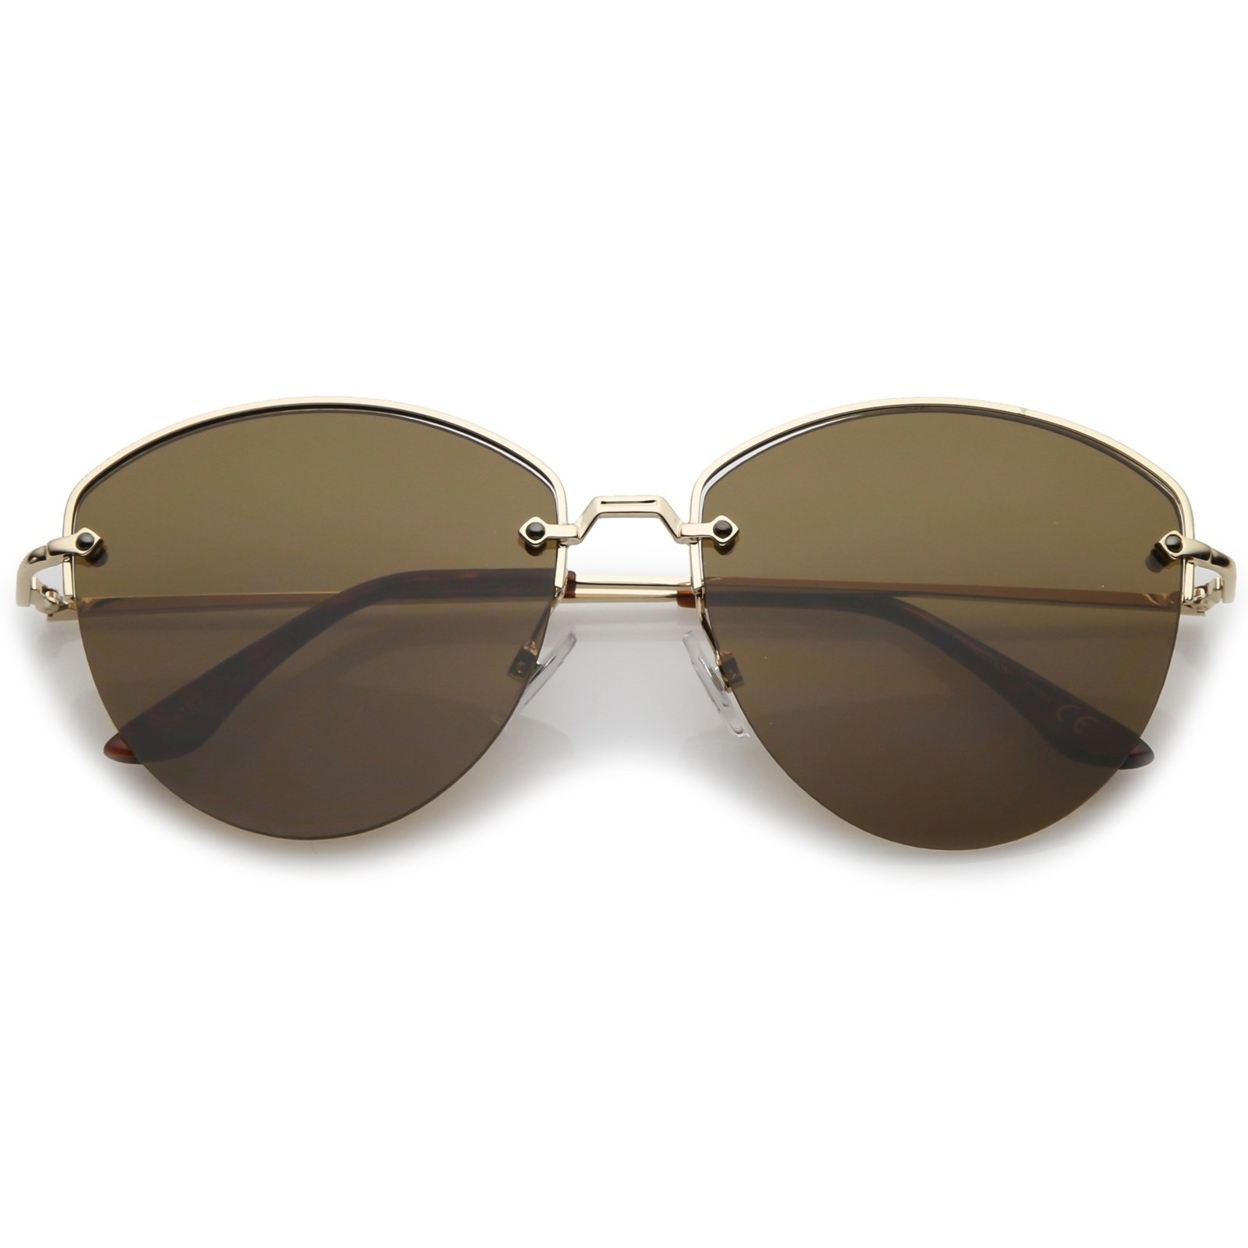 Modern Metal Nose Bridge Flat Lens Semi-Rimless Sunglasses 60mm - Black / Lavender